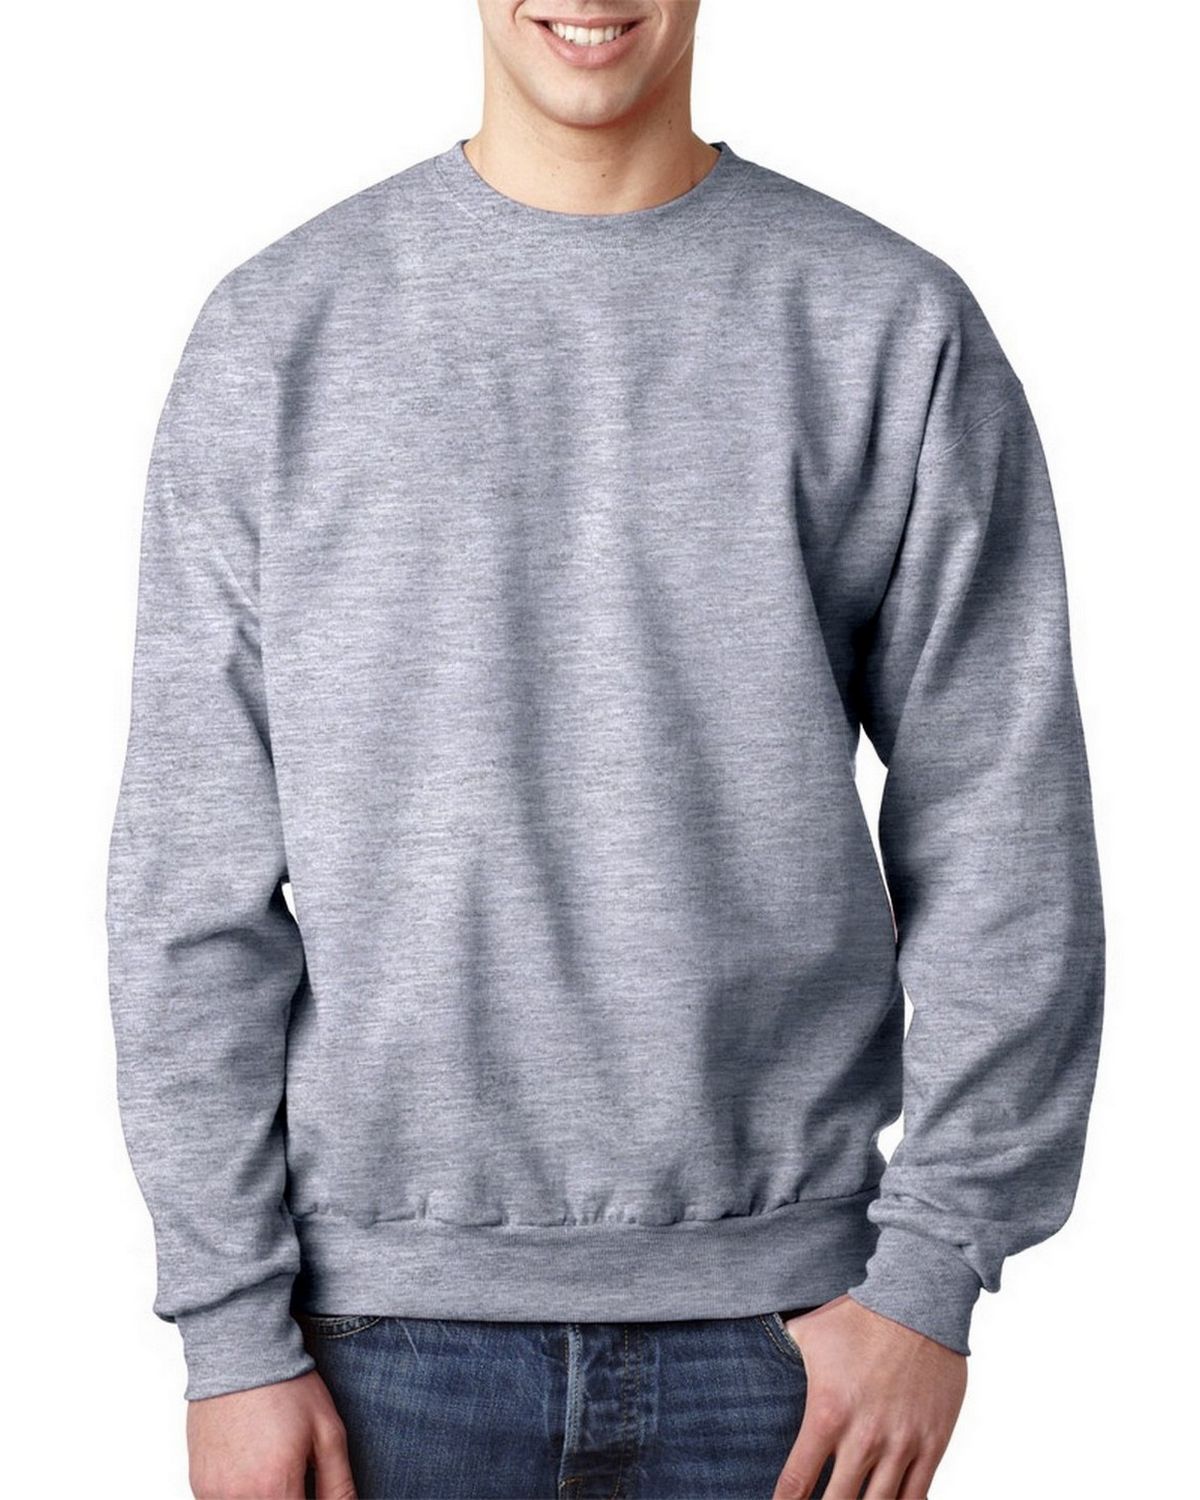 Hanes P160 Adult Sweatshirt - ApparelnBags.com